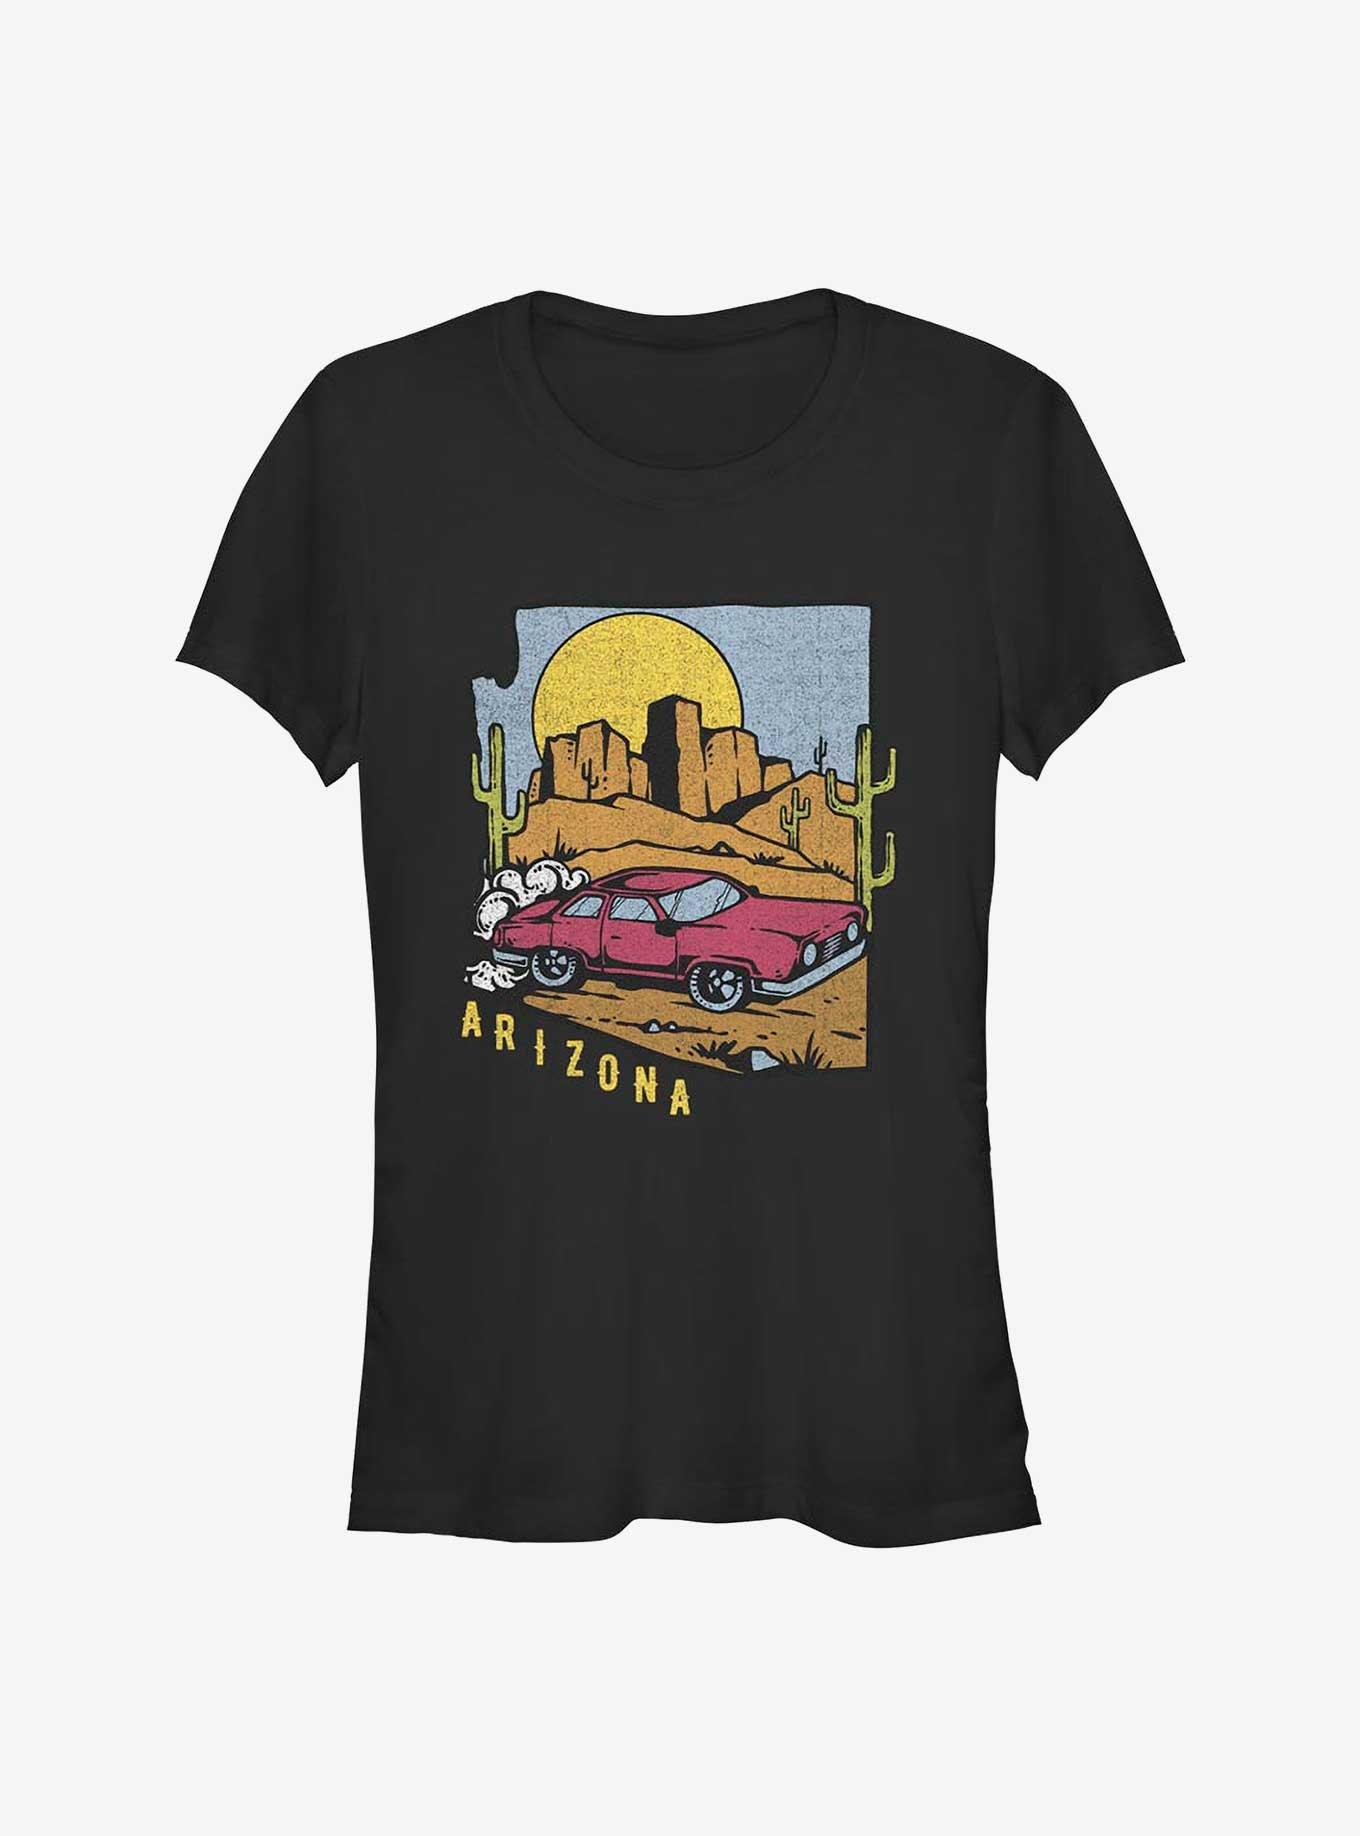 Arizona Vintage Car Girls T-Shirt